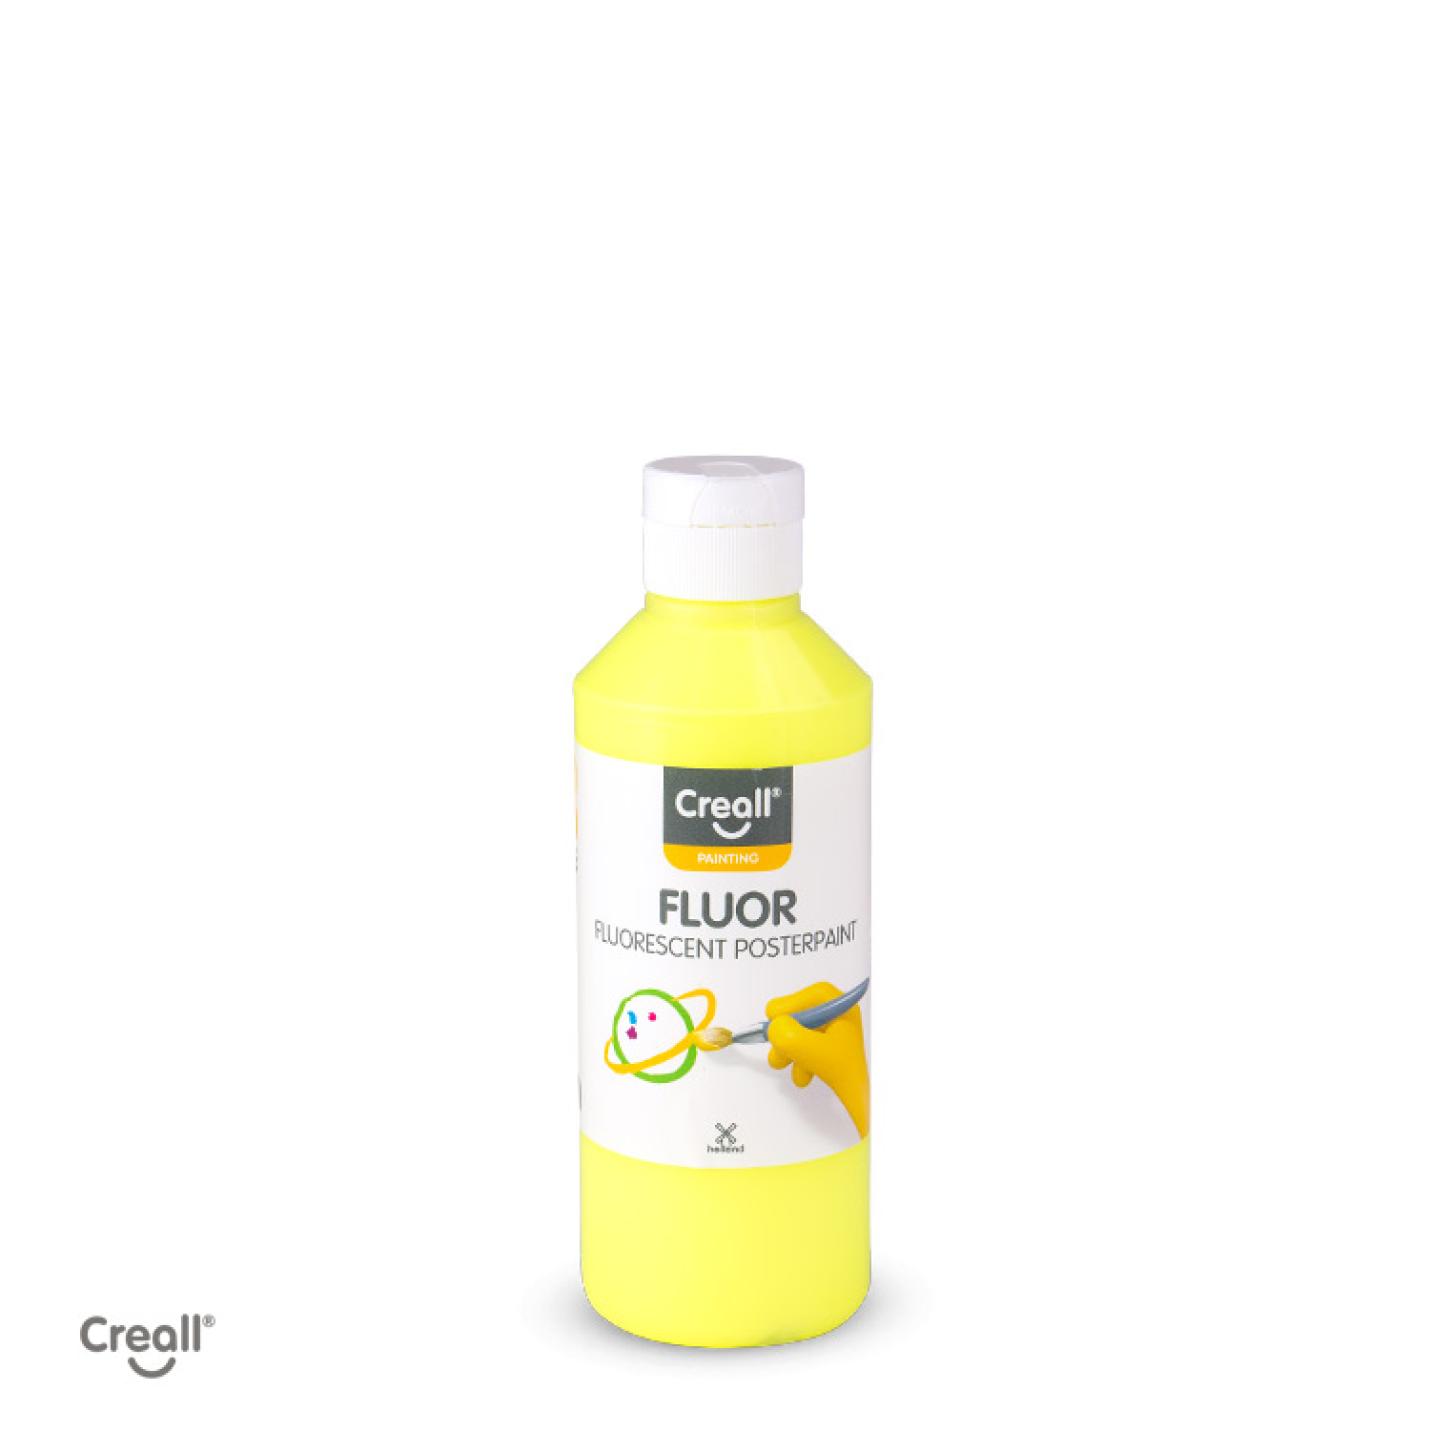 Creall Fluor 250ml fluorescerende plakkaatverf geel